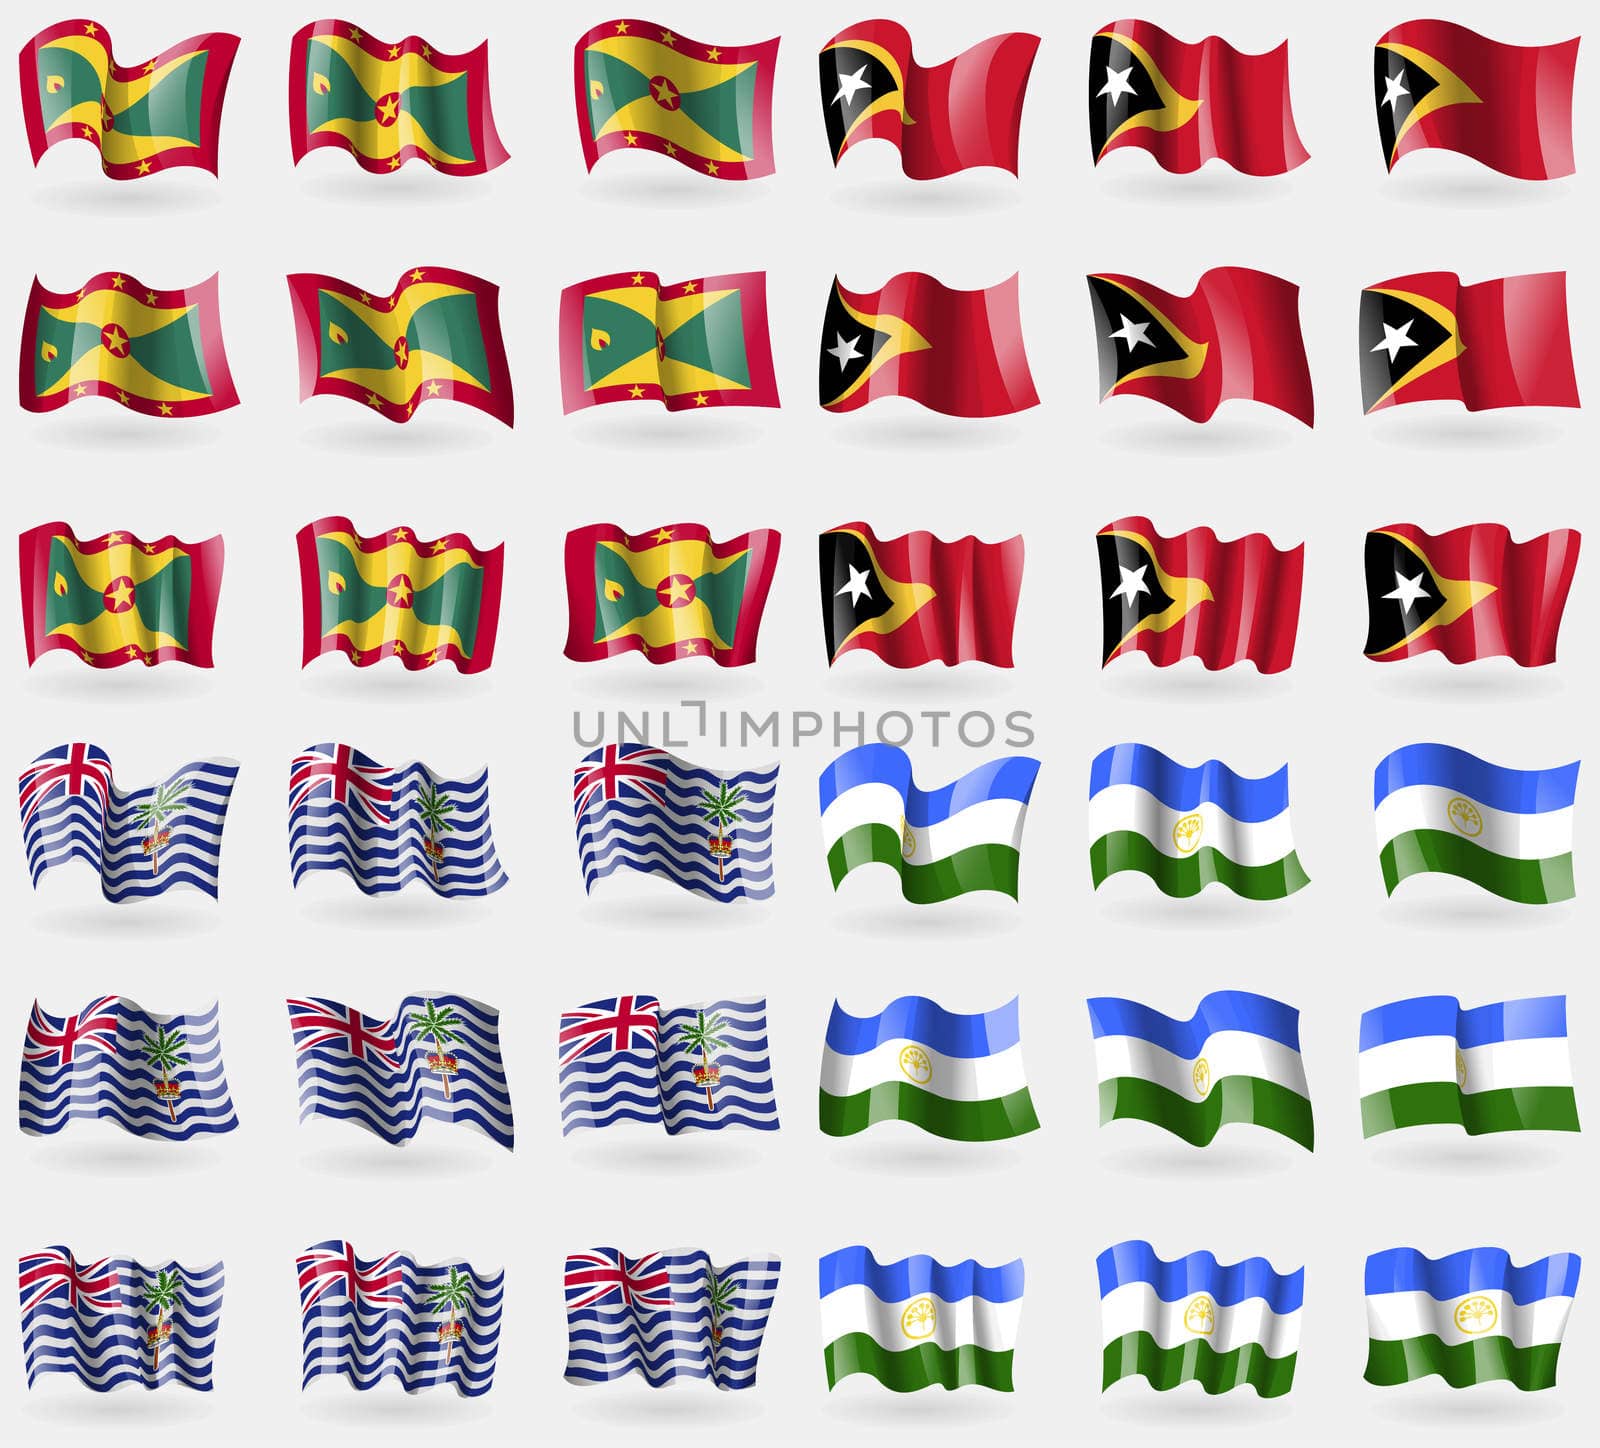 Grenada, East Timor, British Indian Ocean Territory, Bashkortostan. Set of 36 flags of the countries of the world. illustration